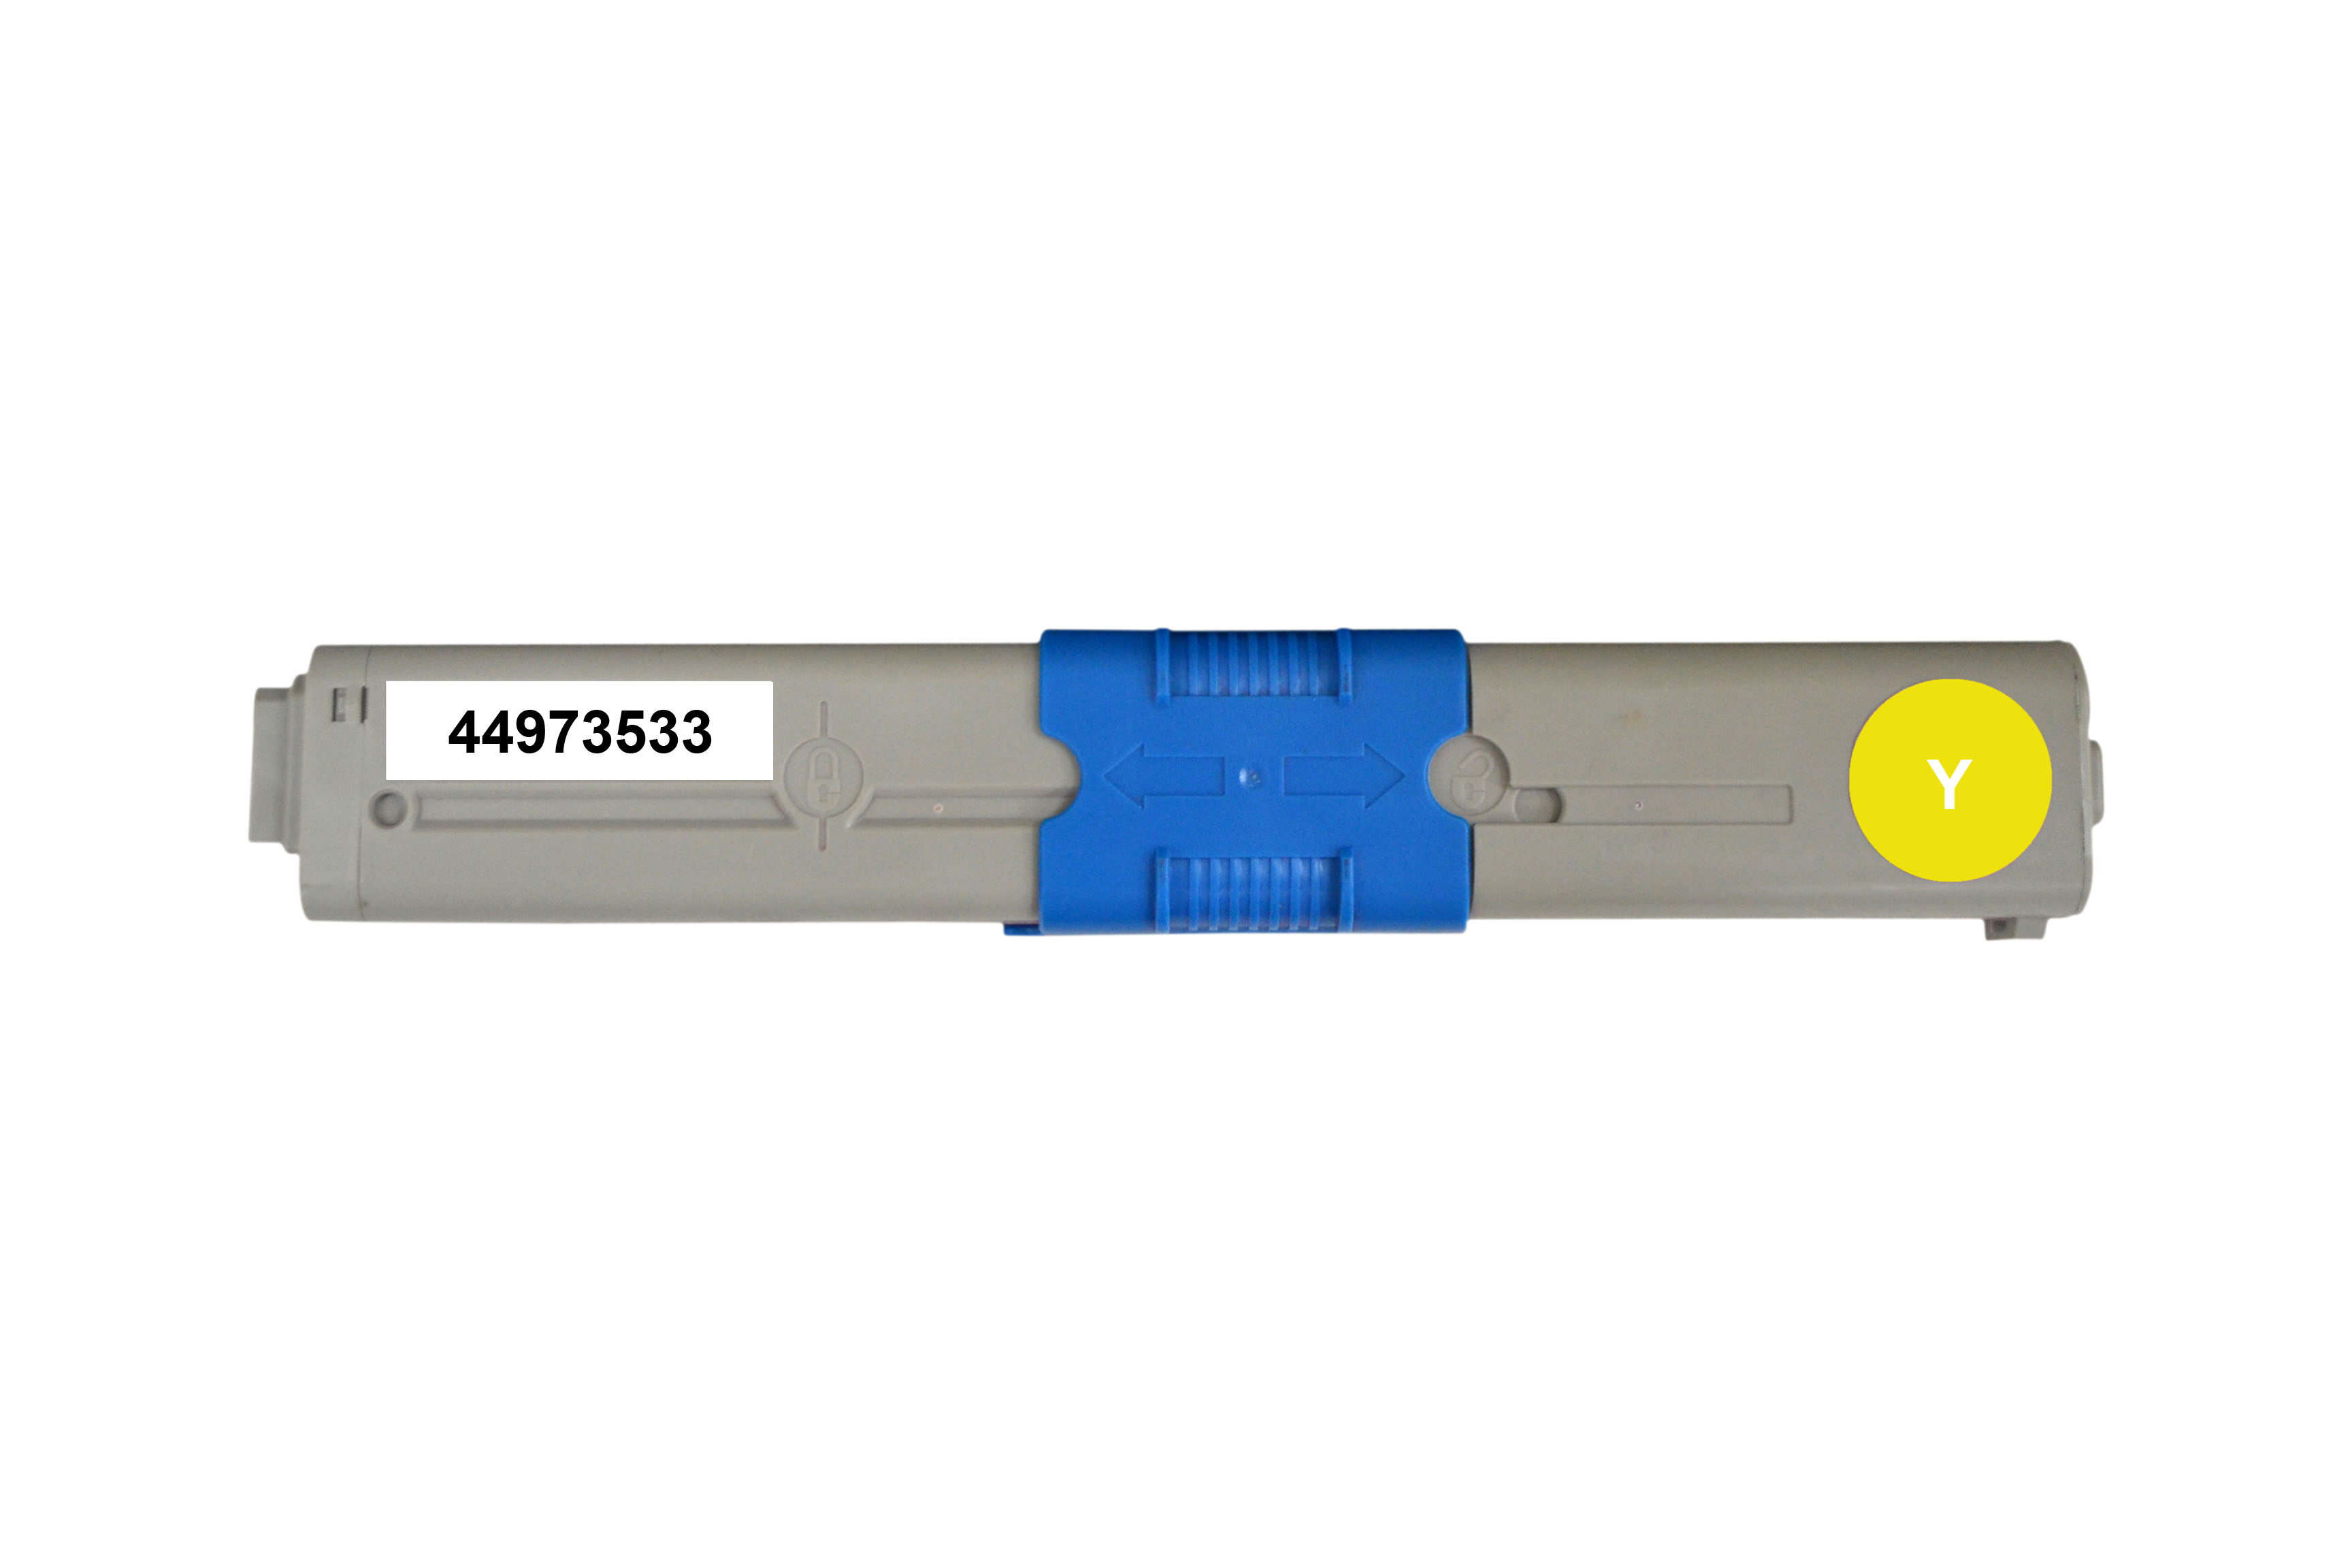 NewbuiltO301Y, Newbuilt Toner kompatibel zu OKI C301 yellow (1.500 S.)